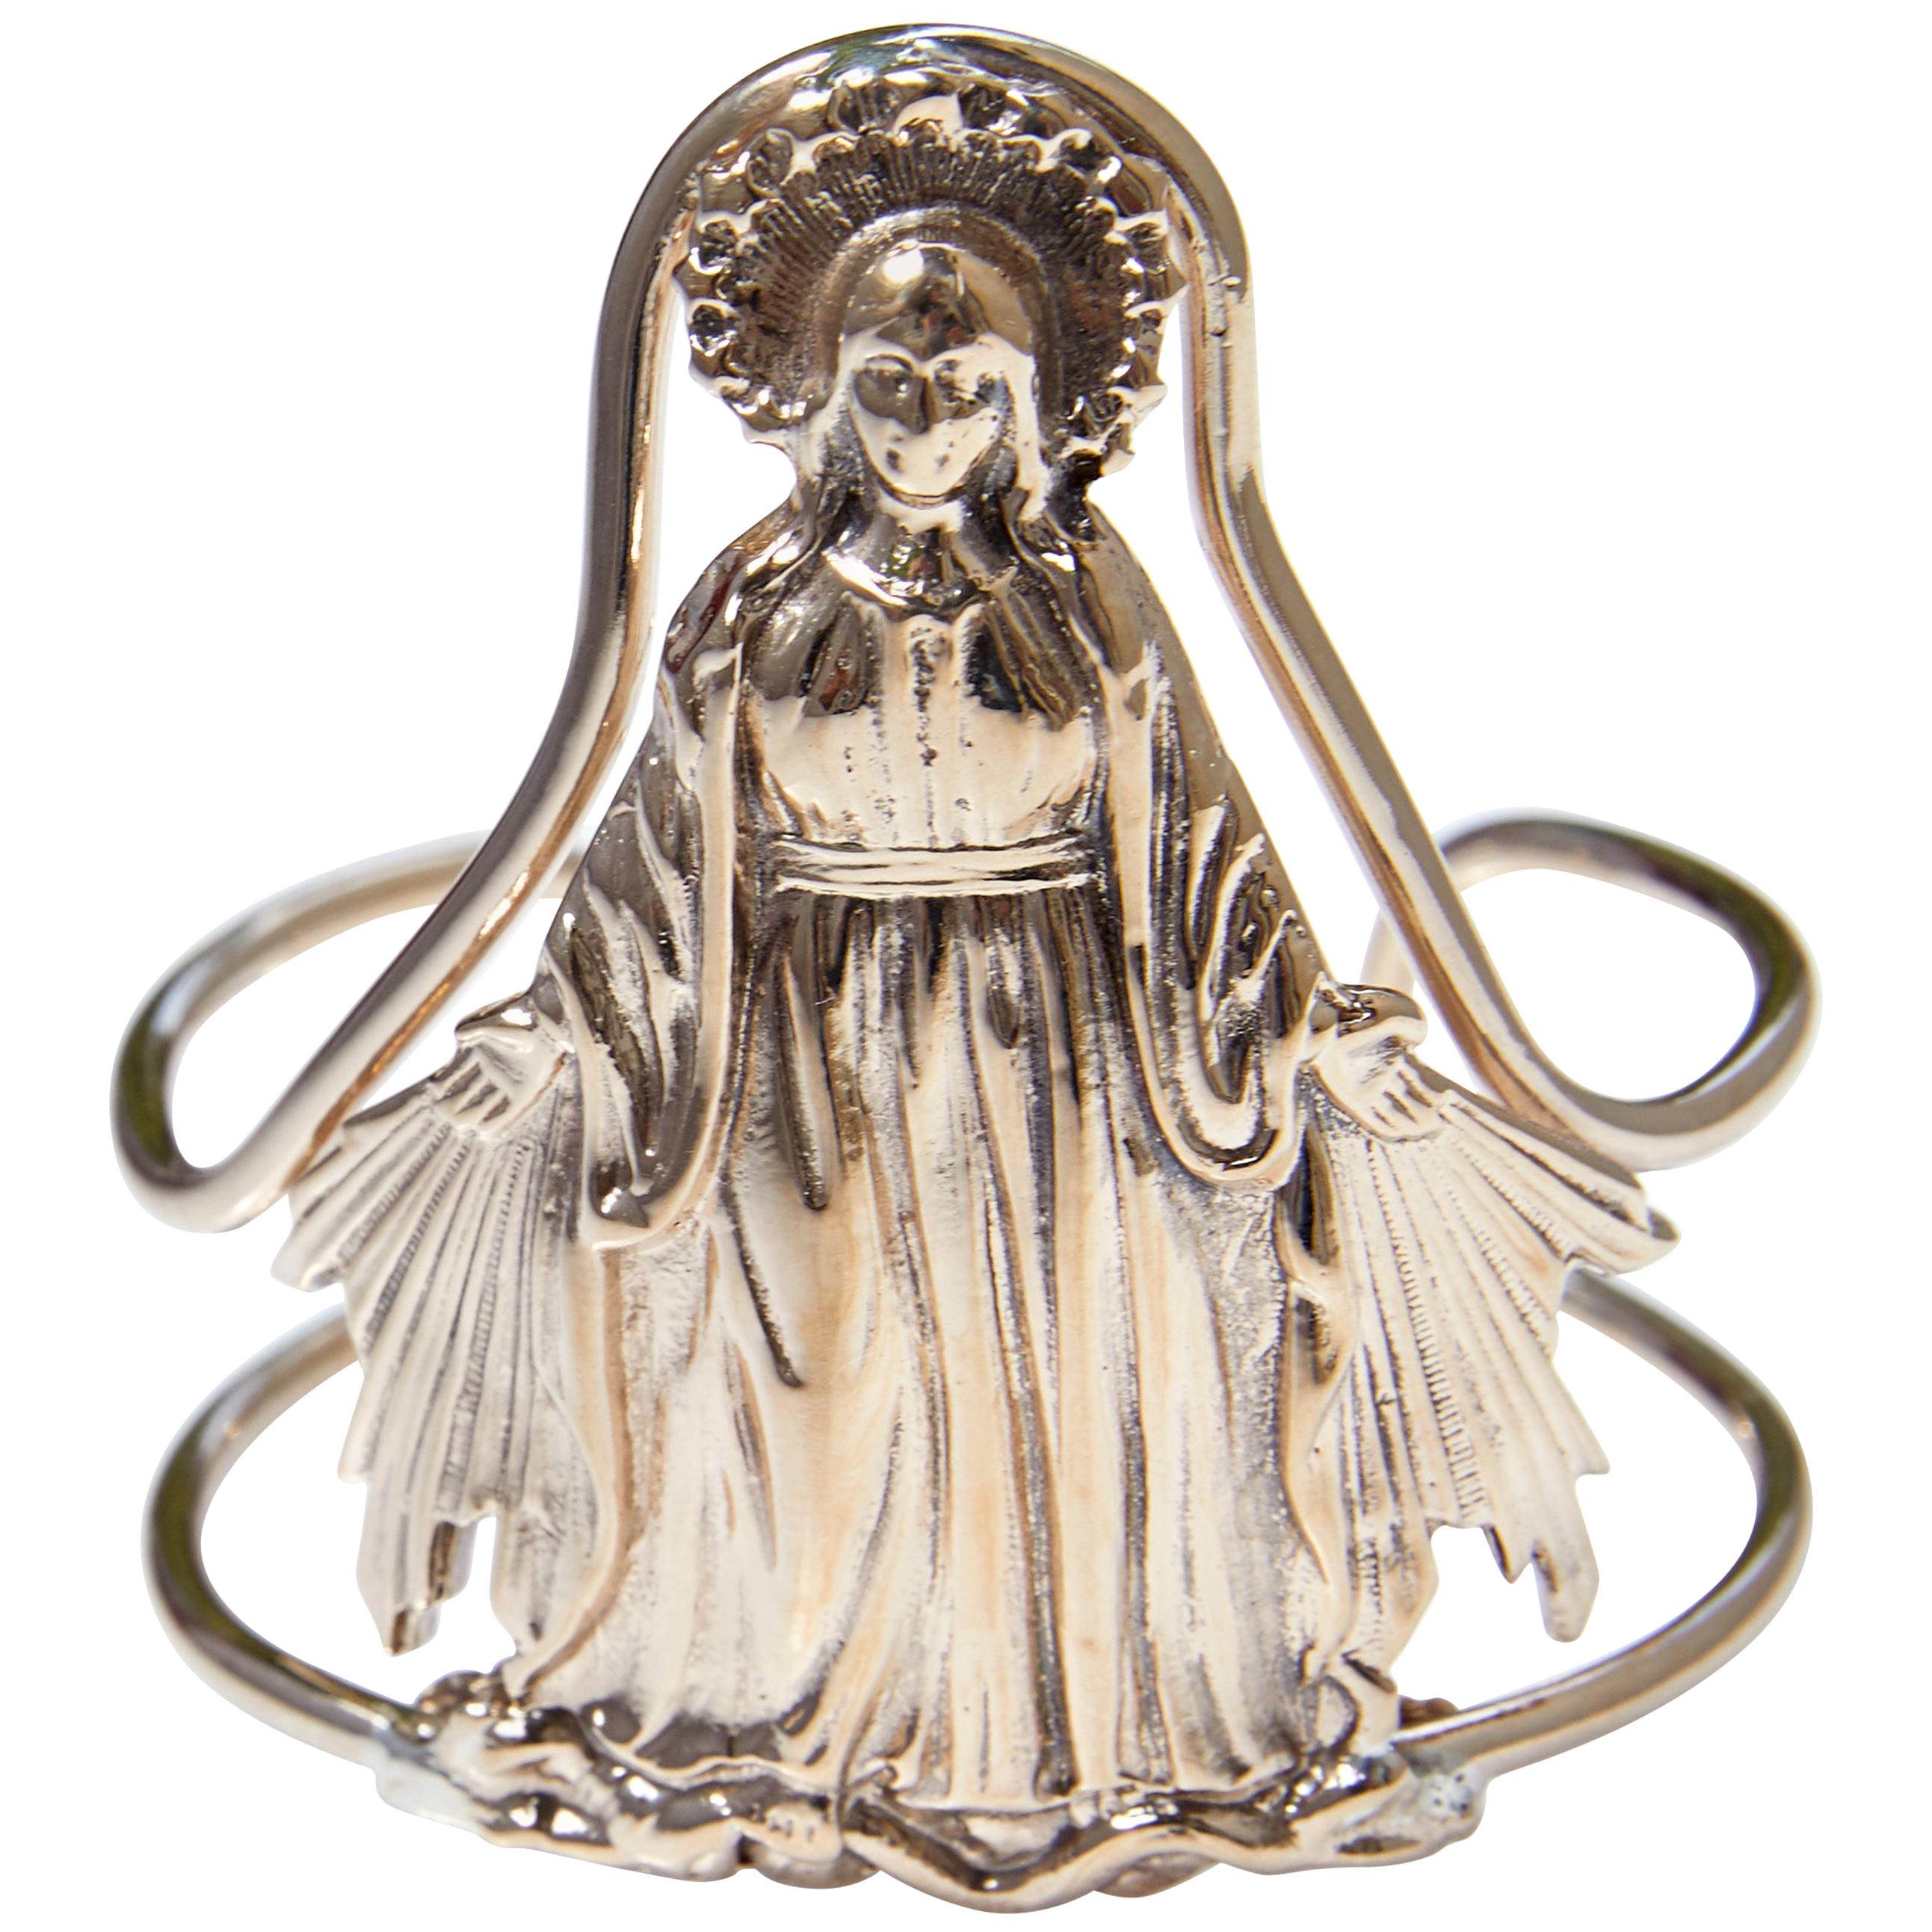 Virgin Mary Arm Cuff Bangle Bracelet Bronze Spiritual Jewelry J Dauphin

J DAUPHIN 